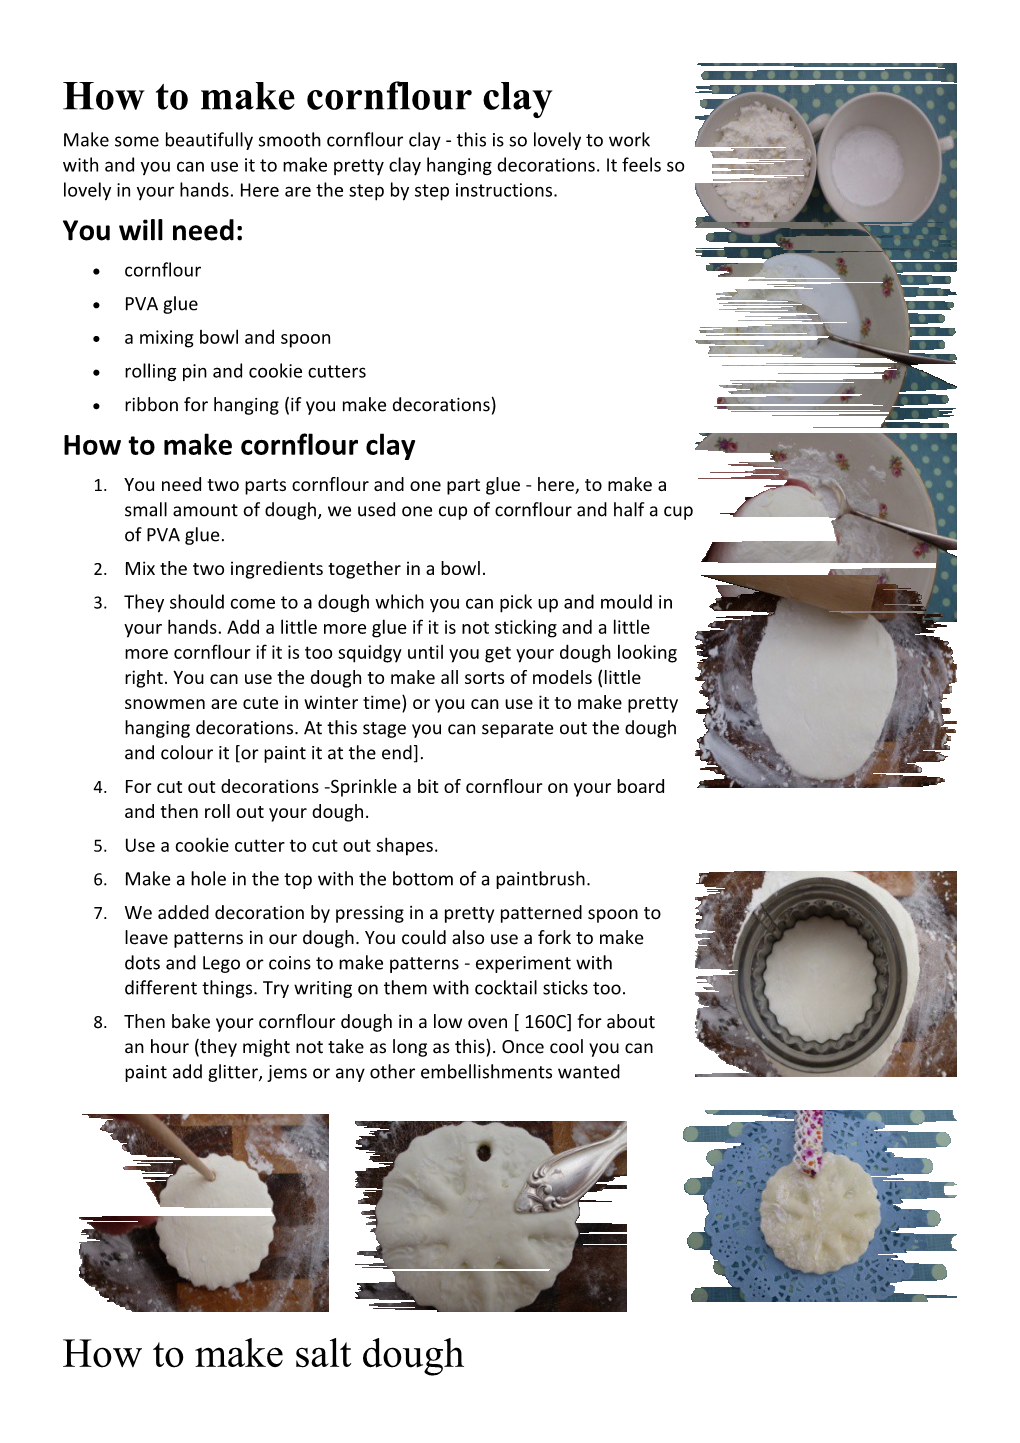 How to Make Cornflour Clay